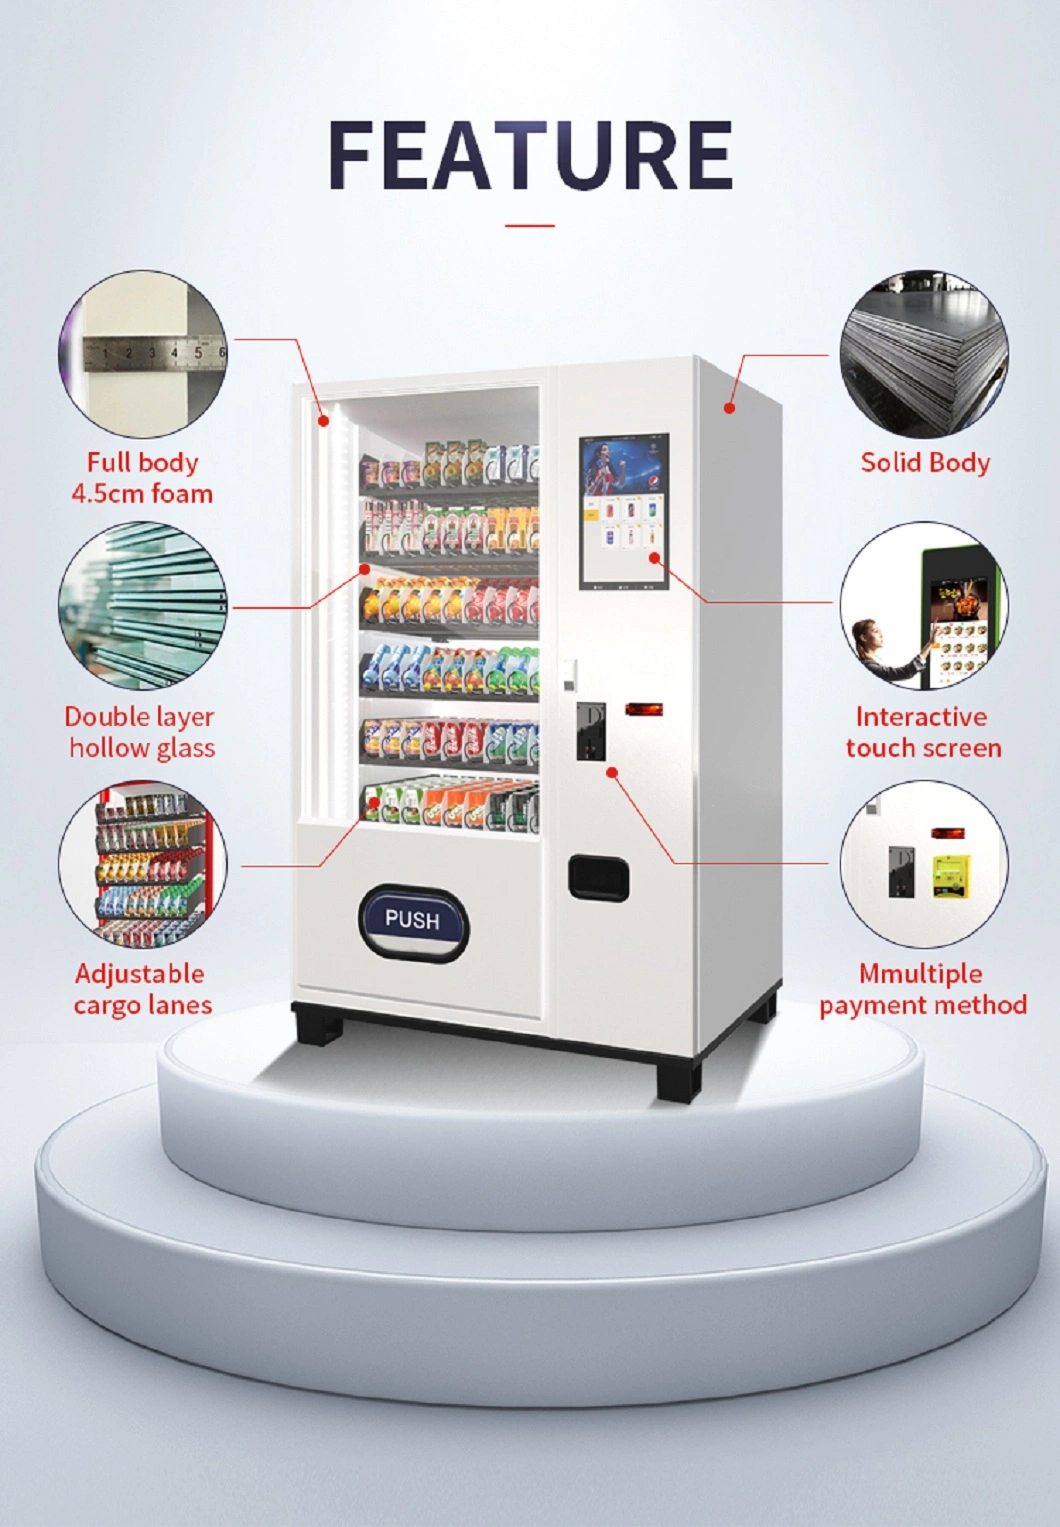 Vendlife Vending Machines with Locker Multifunctional Sale Food and Durex Condom Gumball Machine